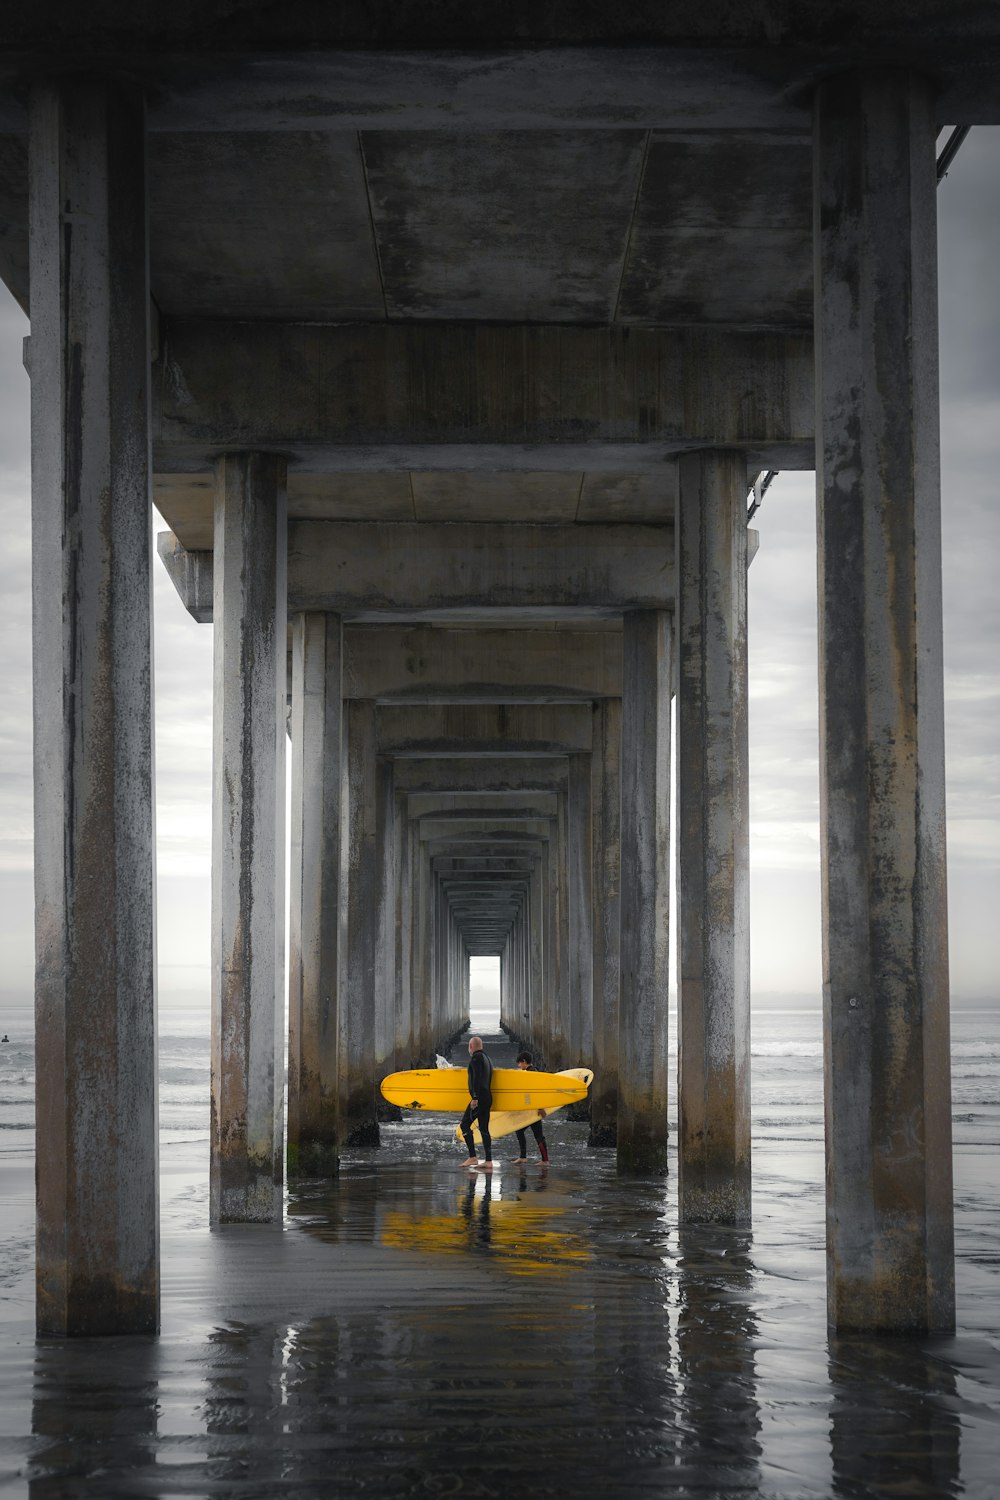 person in yellow kayak on body of water under bridge